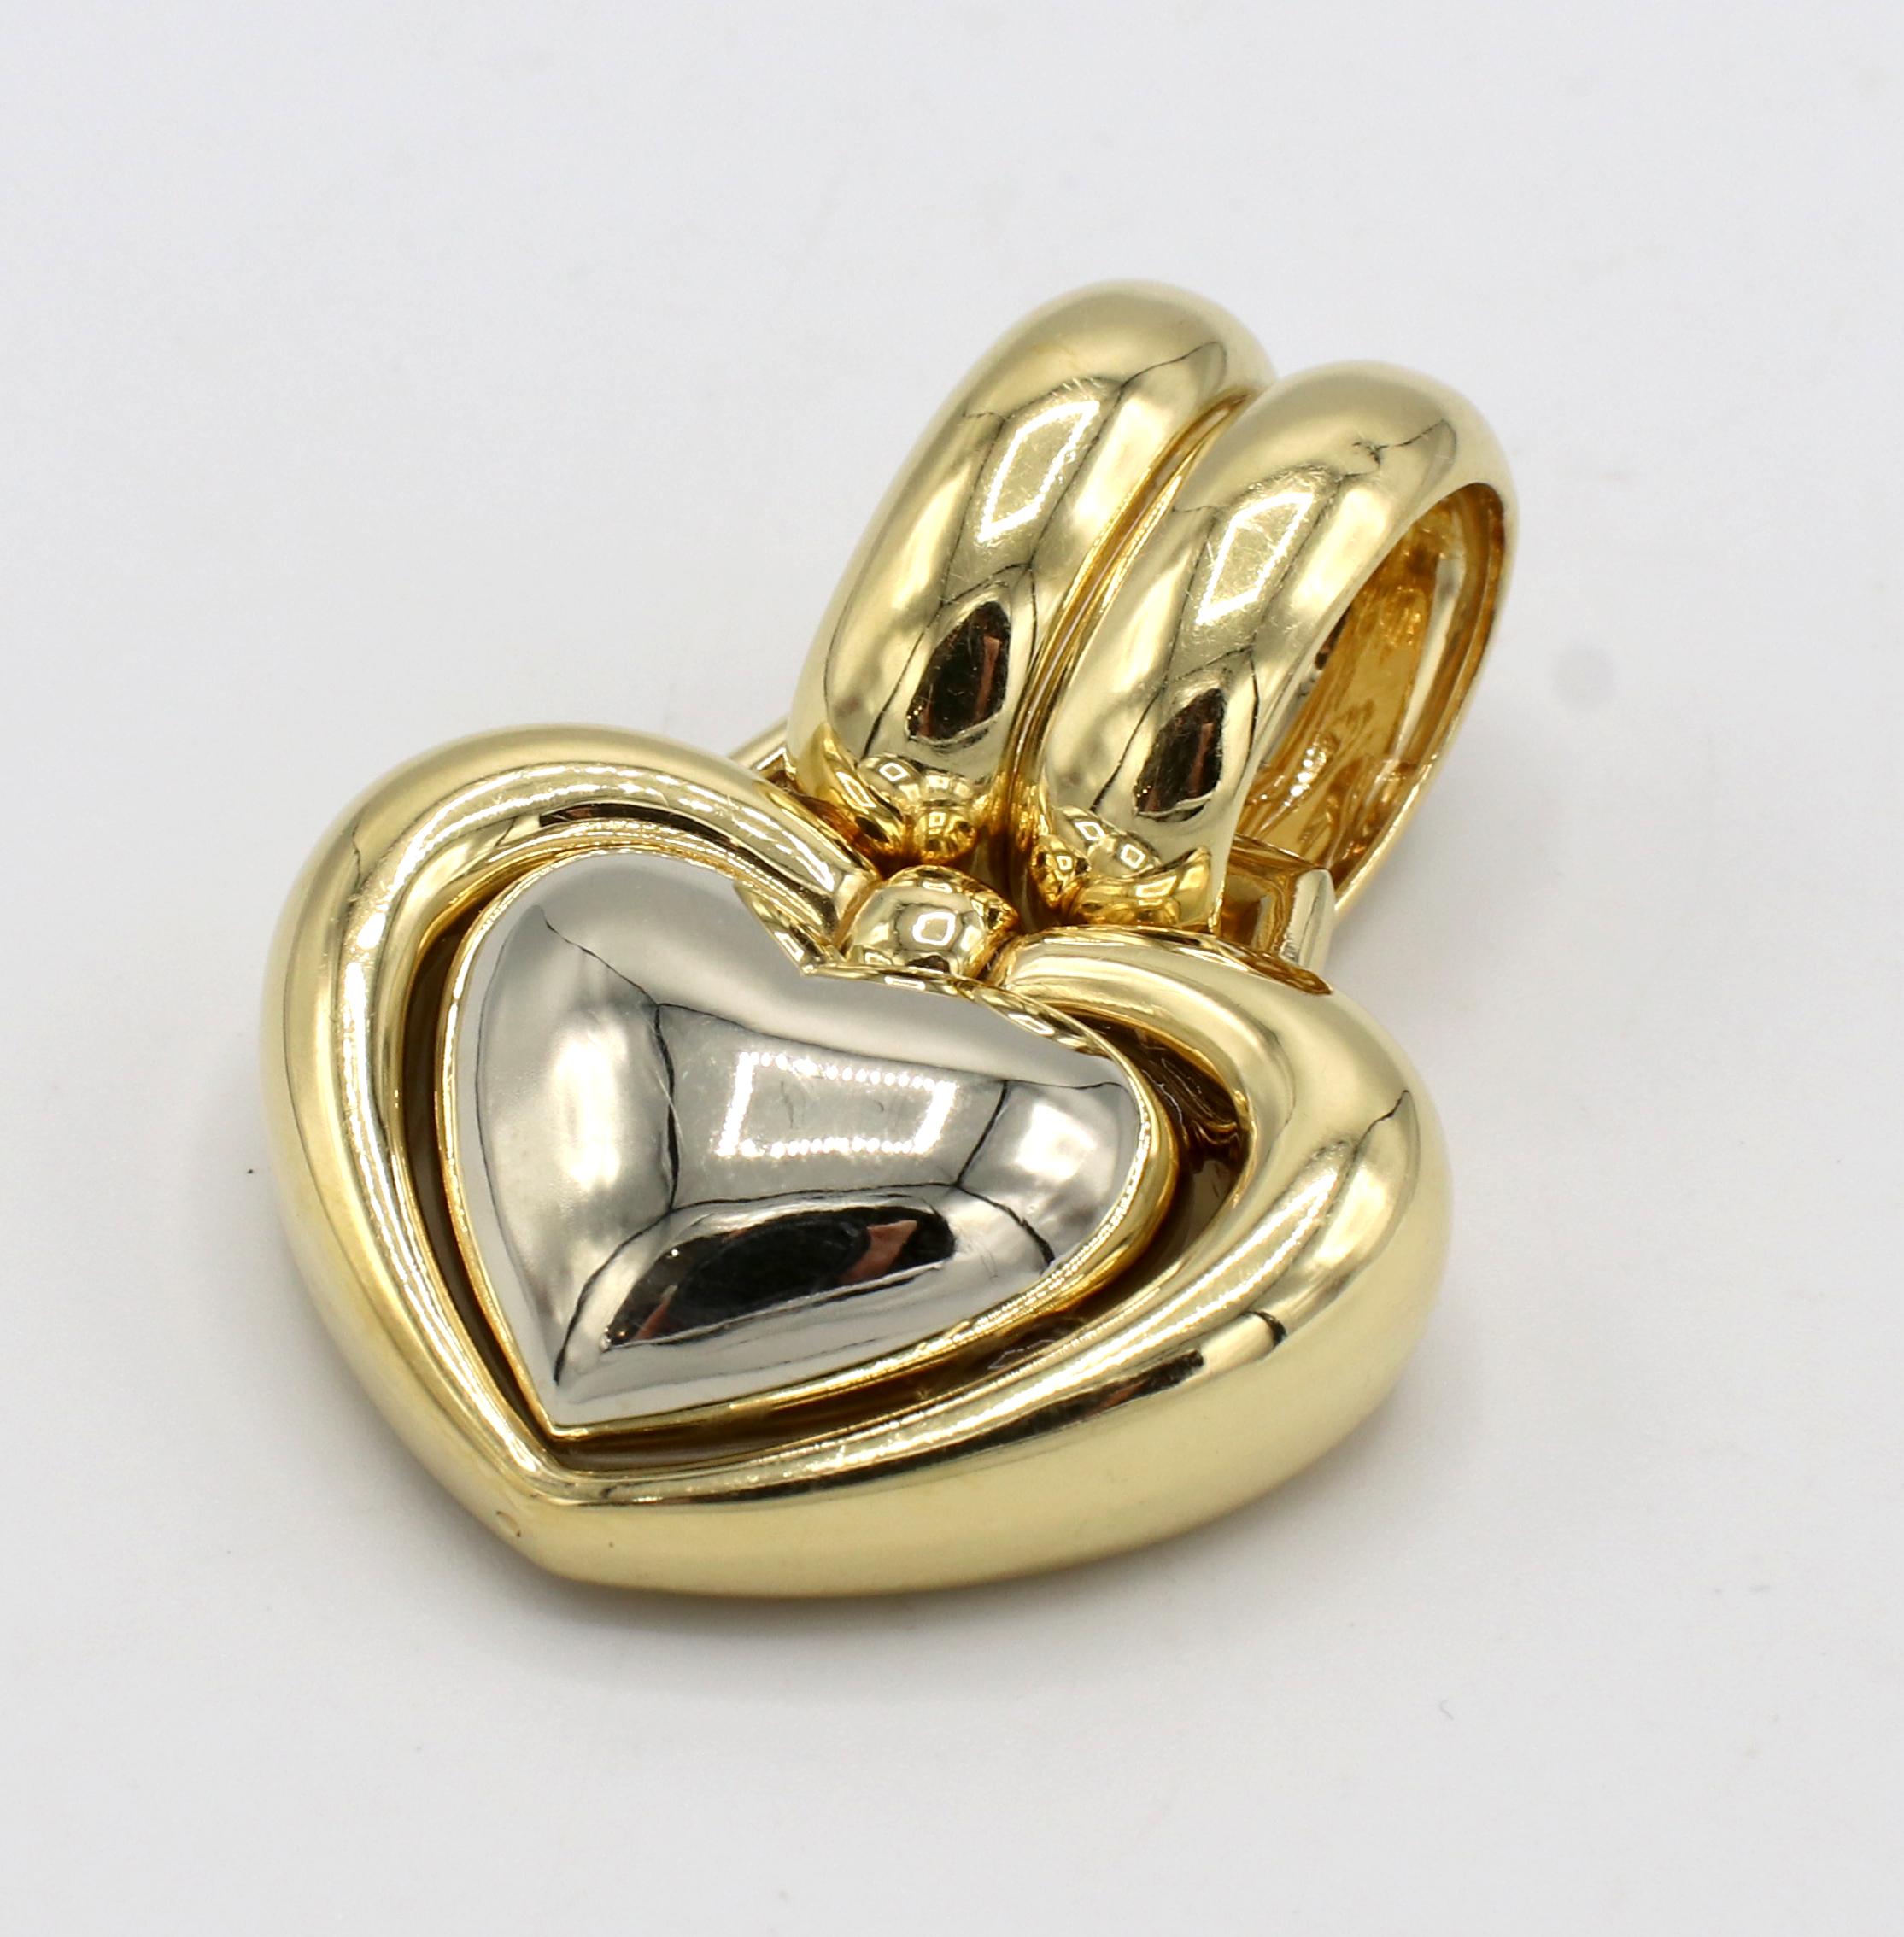 Chimento 18 Karat Two - Tone Large Heart Slide Enhancer Pendant 
Metal: 18k yellow & white gold
Weight: 23.5 grams
Length: 39mm
Width: 30.5mm
Link opening: 14mm
